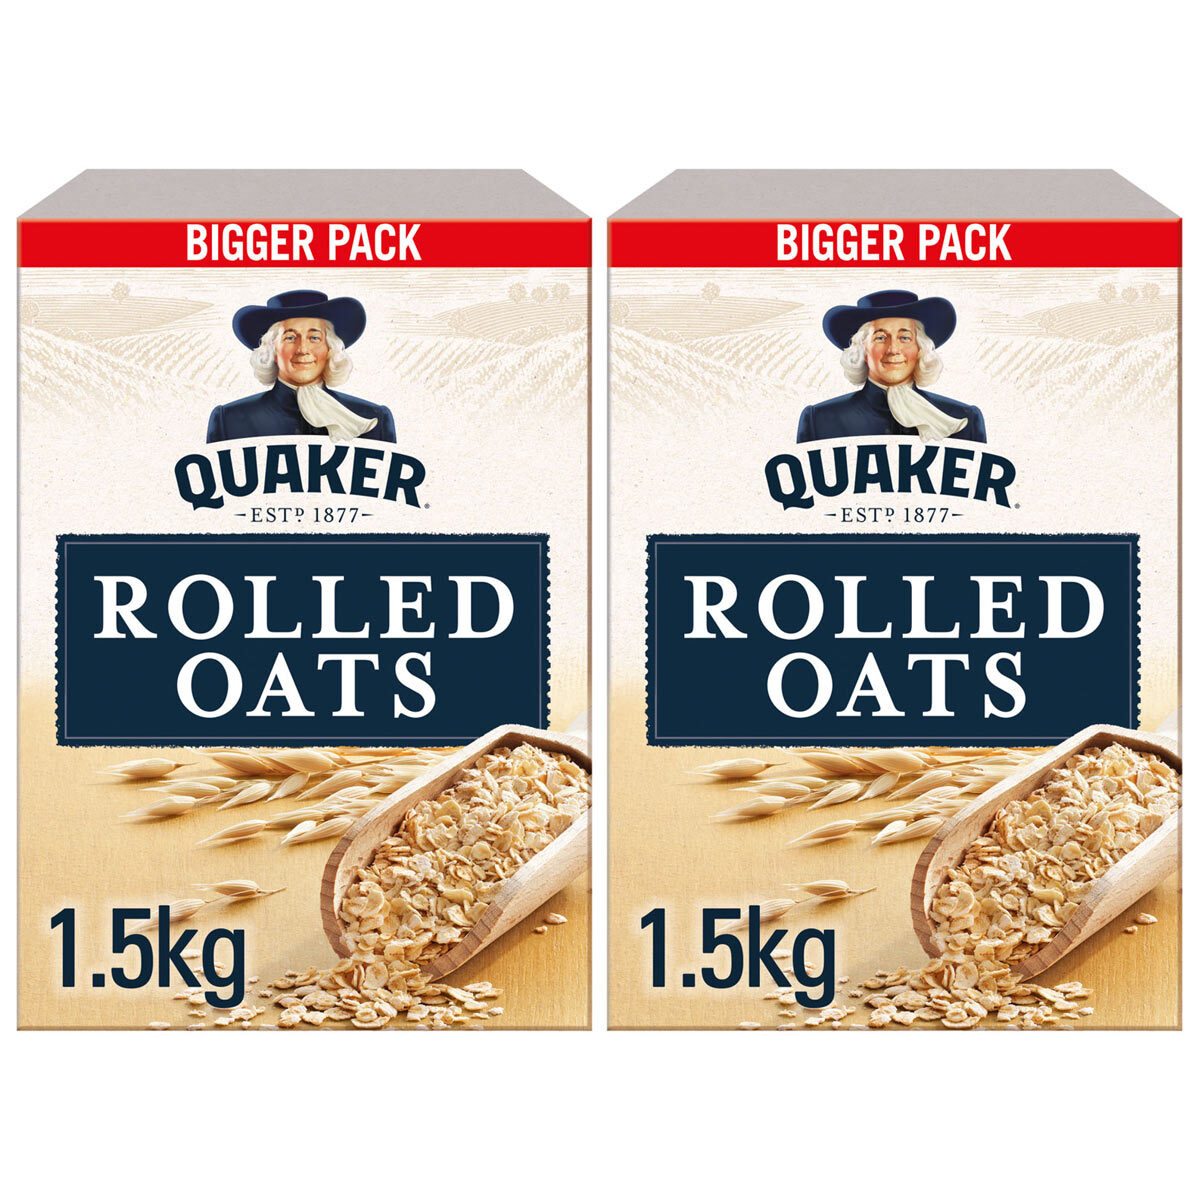 Quaker rolled oats 1kg (UK) – American Food Ave.